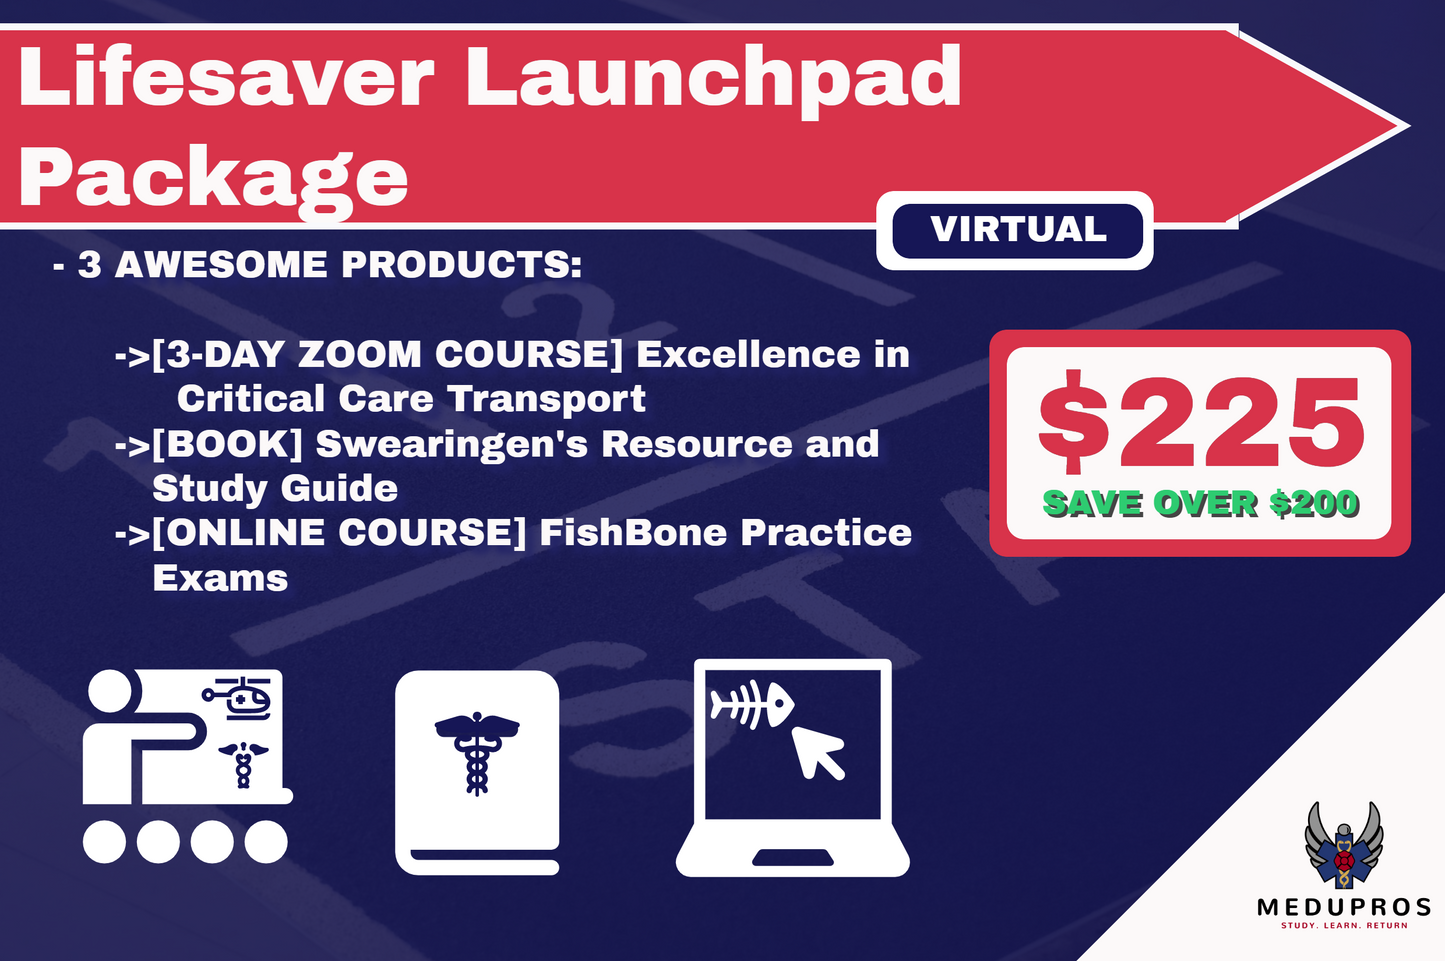 LiveSaver LaunchPad Bundle: VIRTUAL